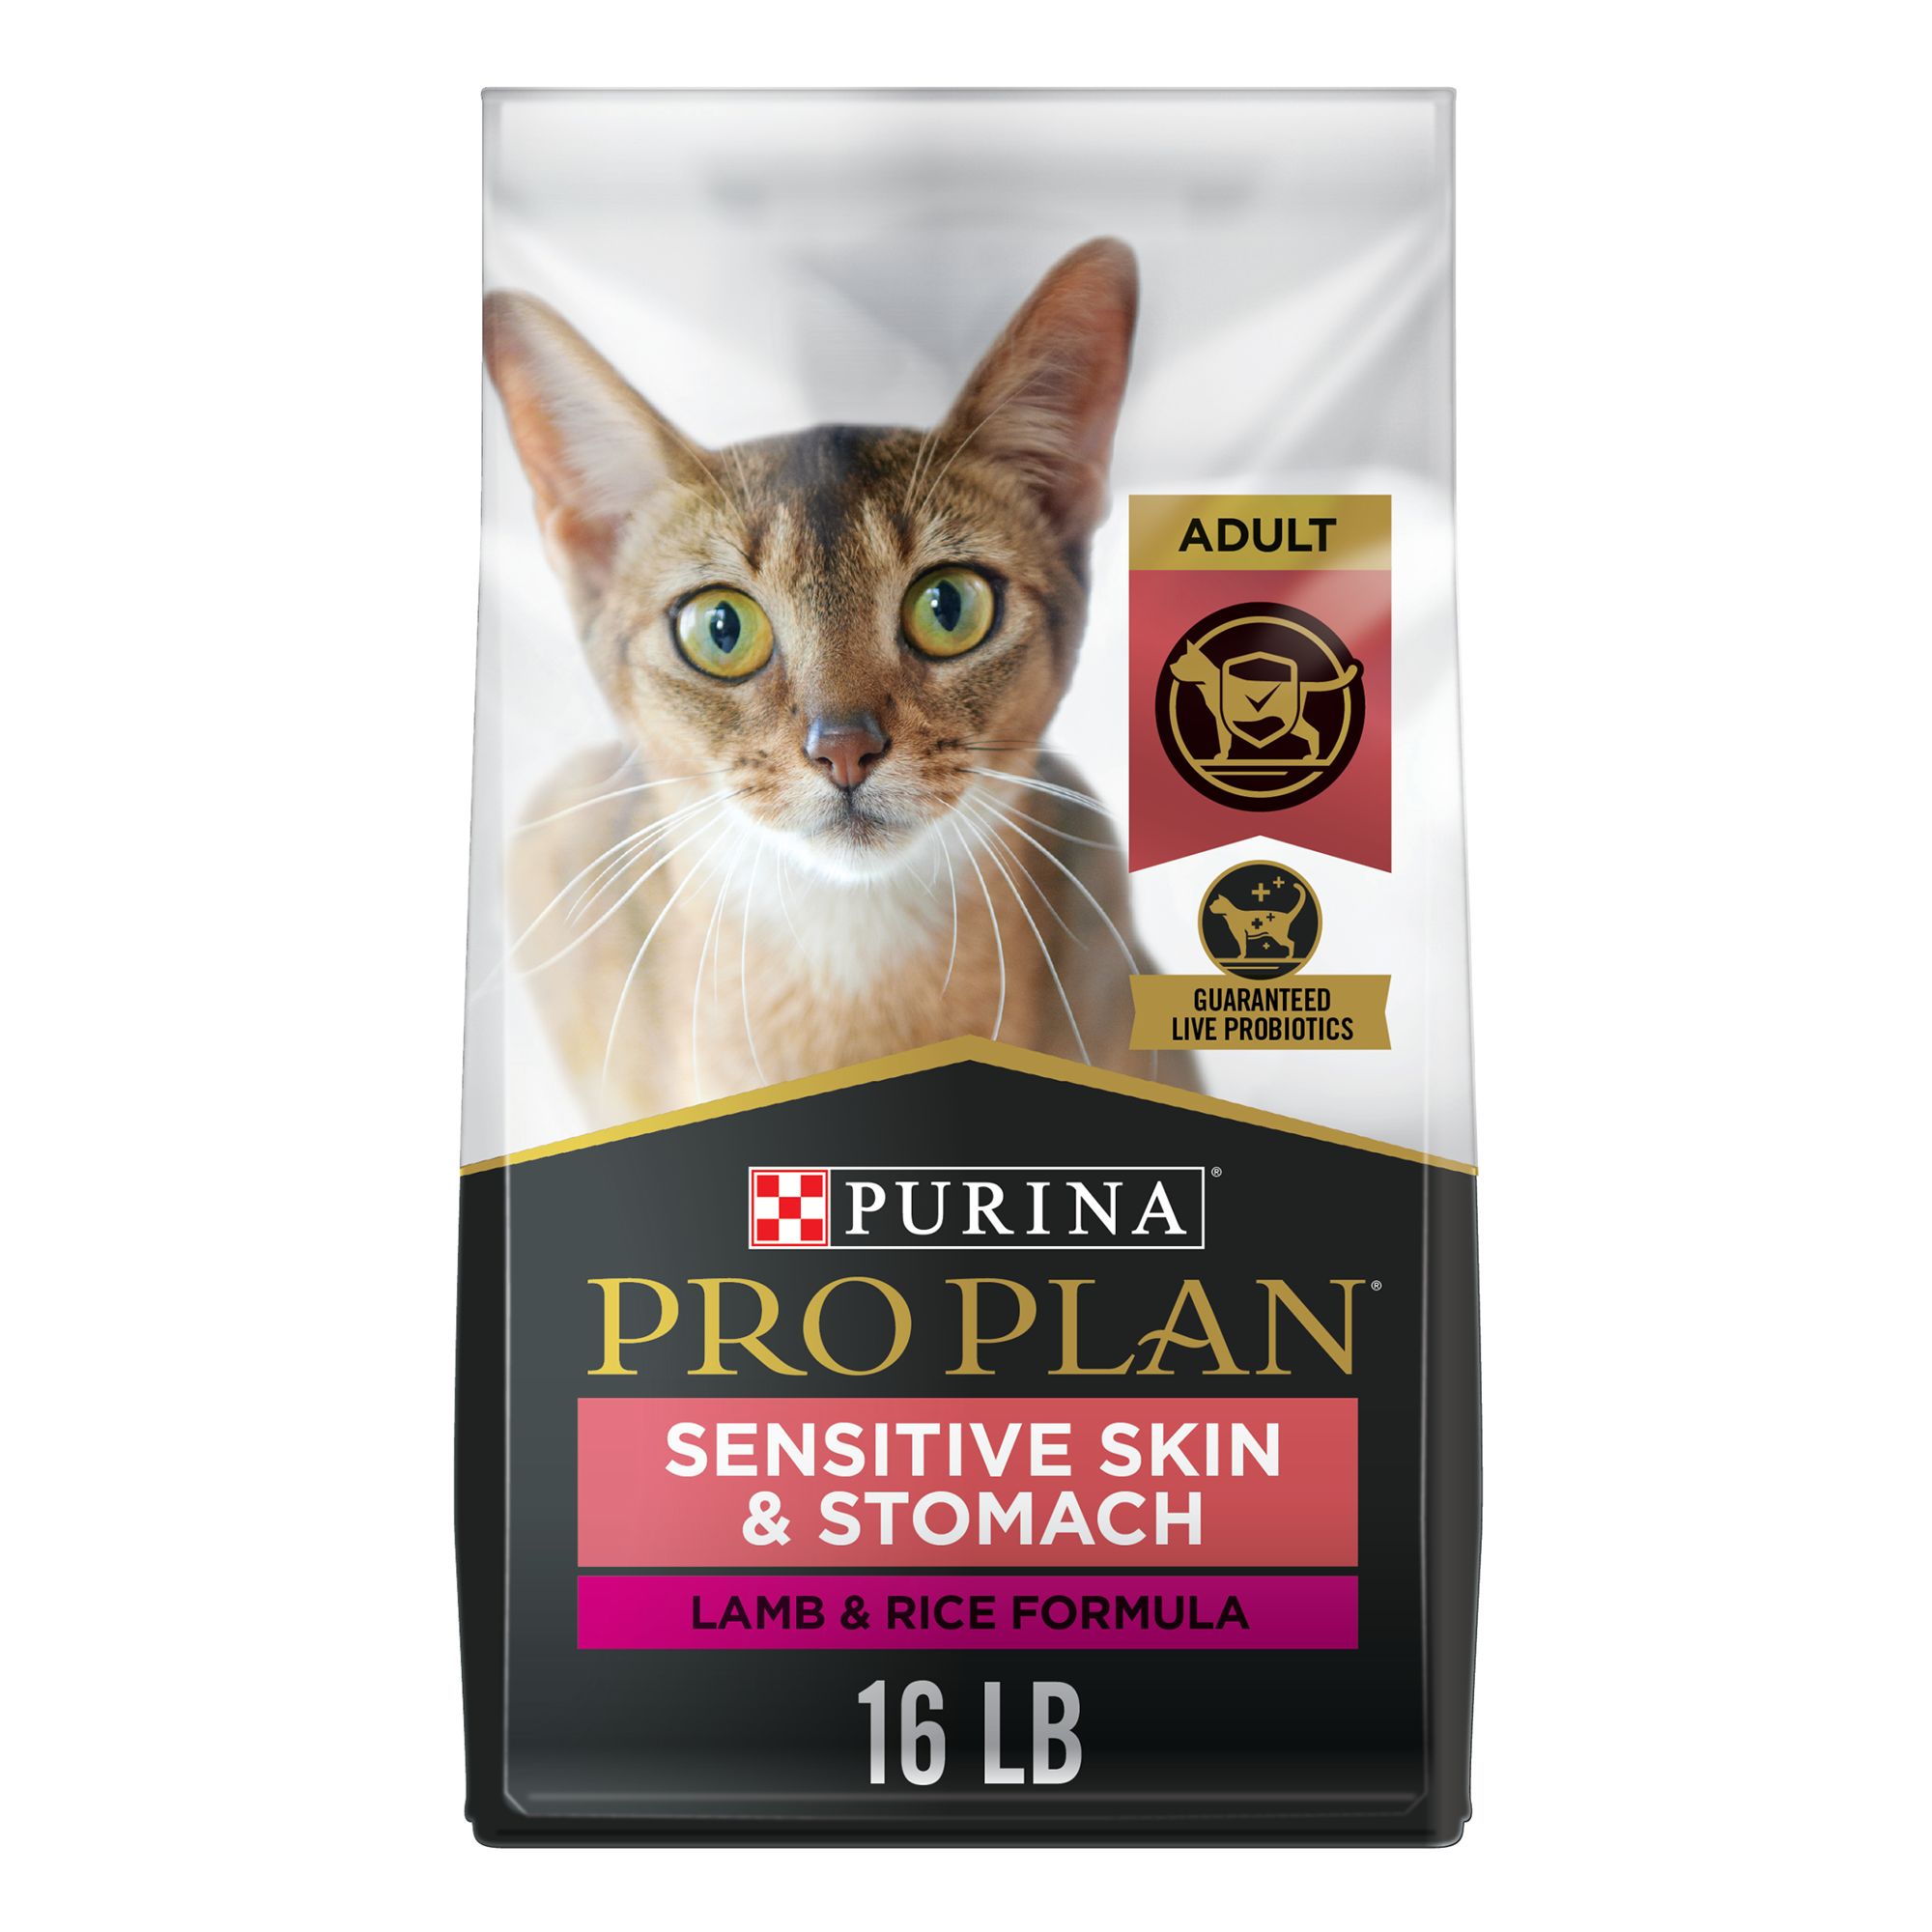 Purina Pro Plan Specialized Sensitive Skin Stomach Adult Cat Food Cat Dry Food Petsmart